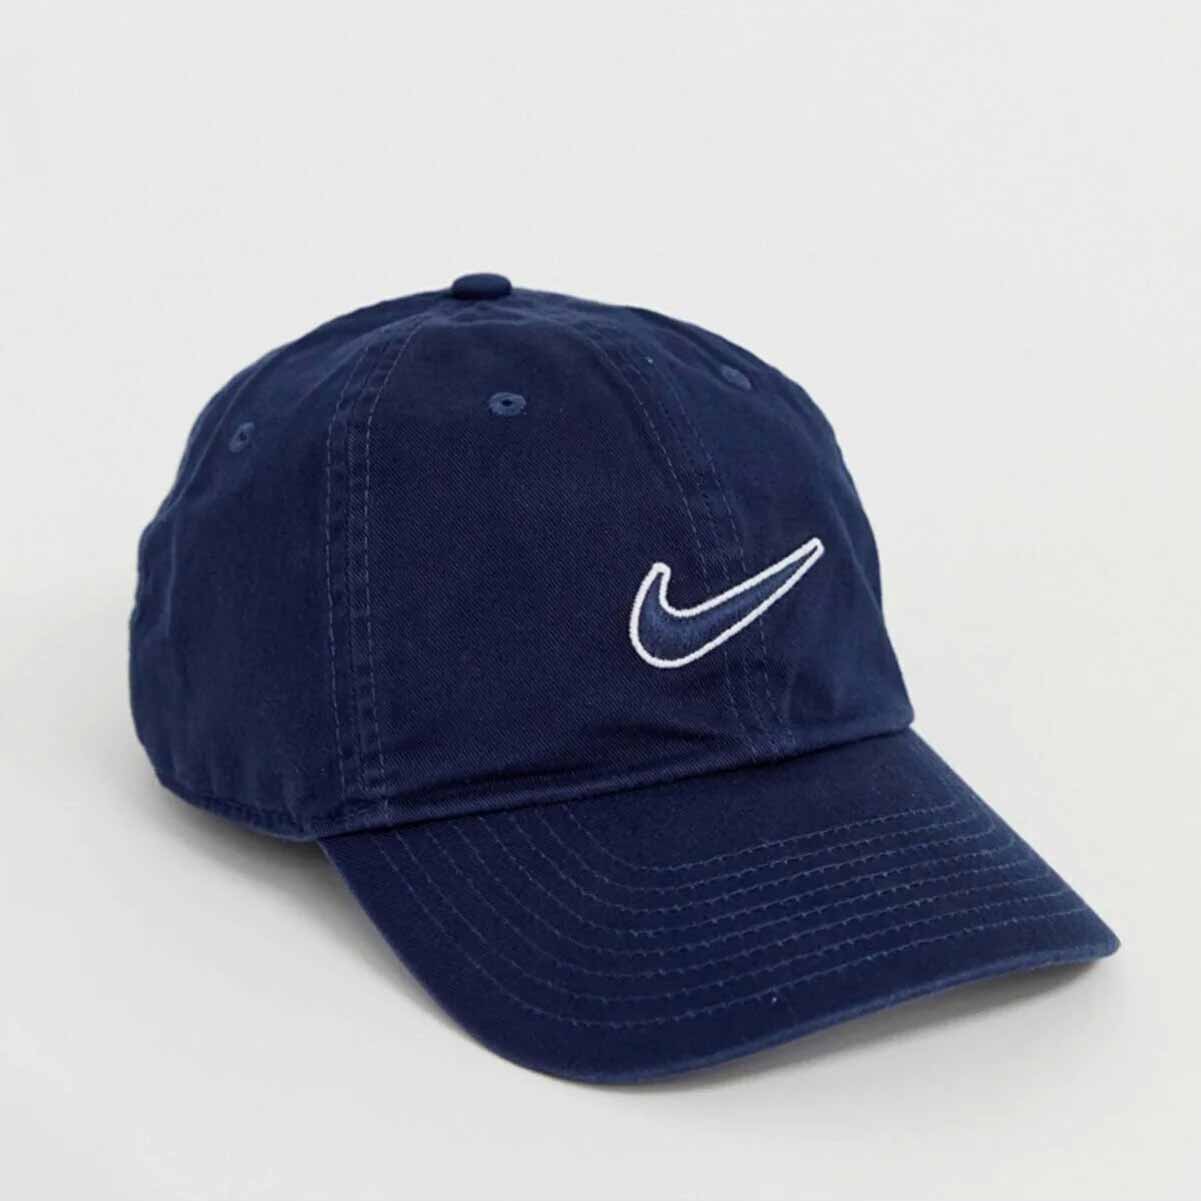 Nike Sportswear Heritage 86 Adjustable Cap